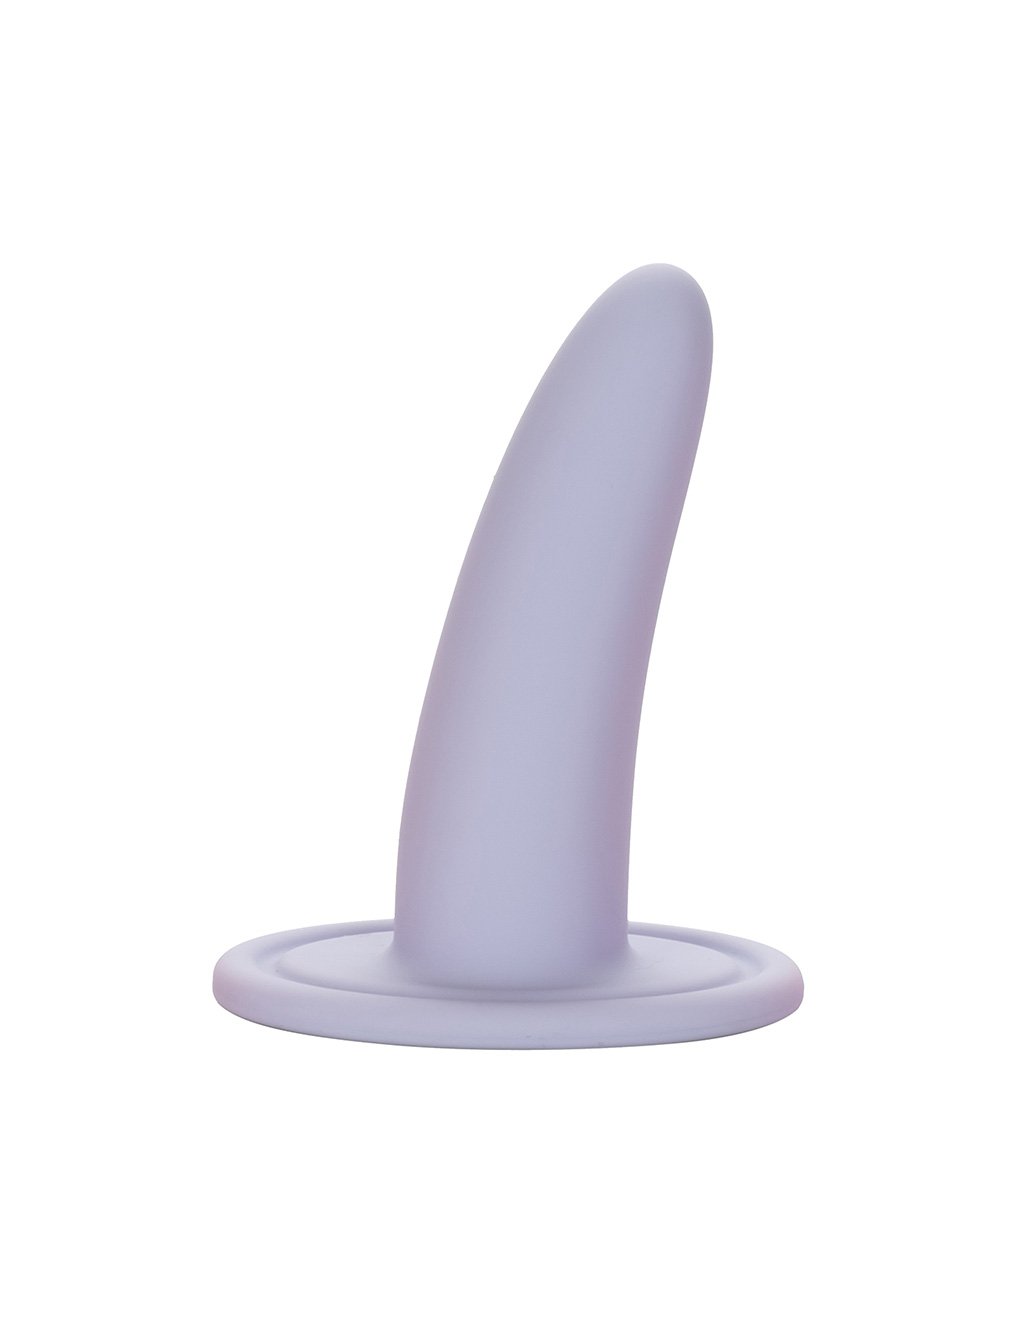 She-Ology 5 Piece Vaginal Dilator Set- Large purple